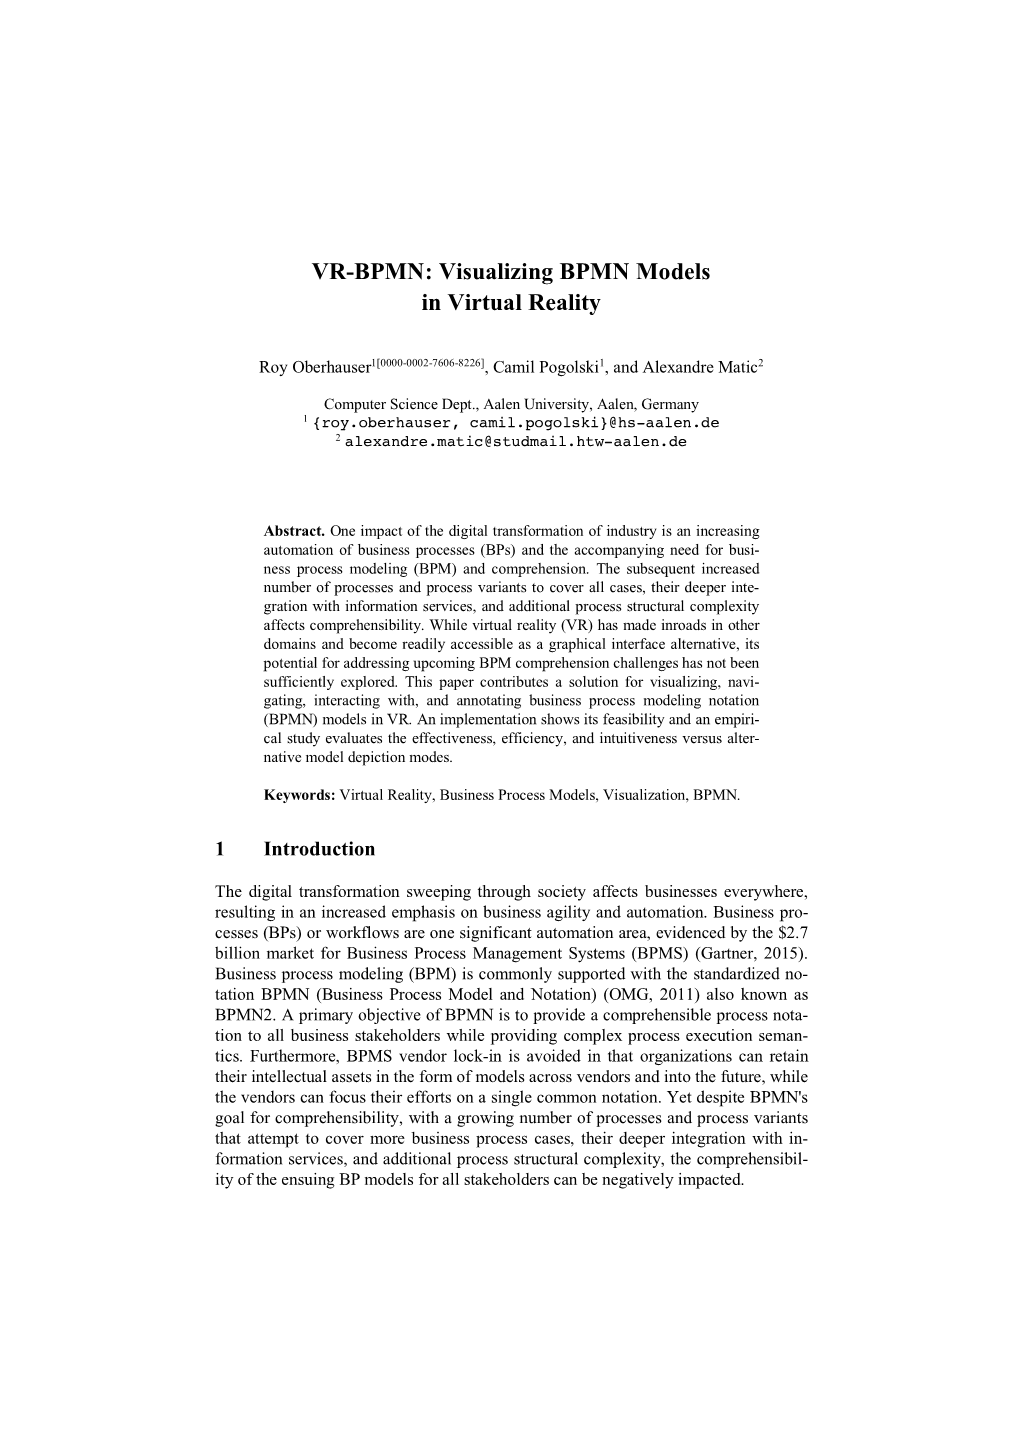 VR-BPMN: Visualizing BPMN Models in Virtual Reality